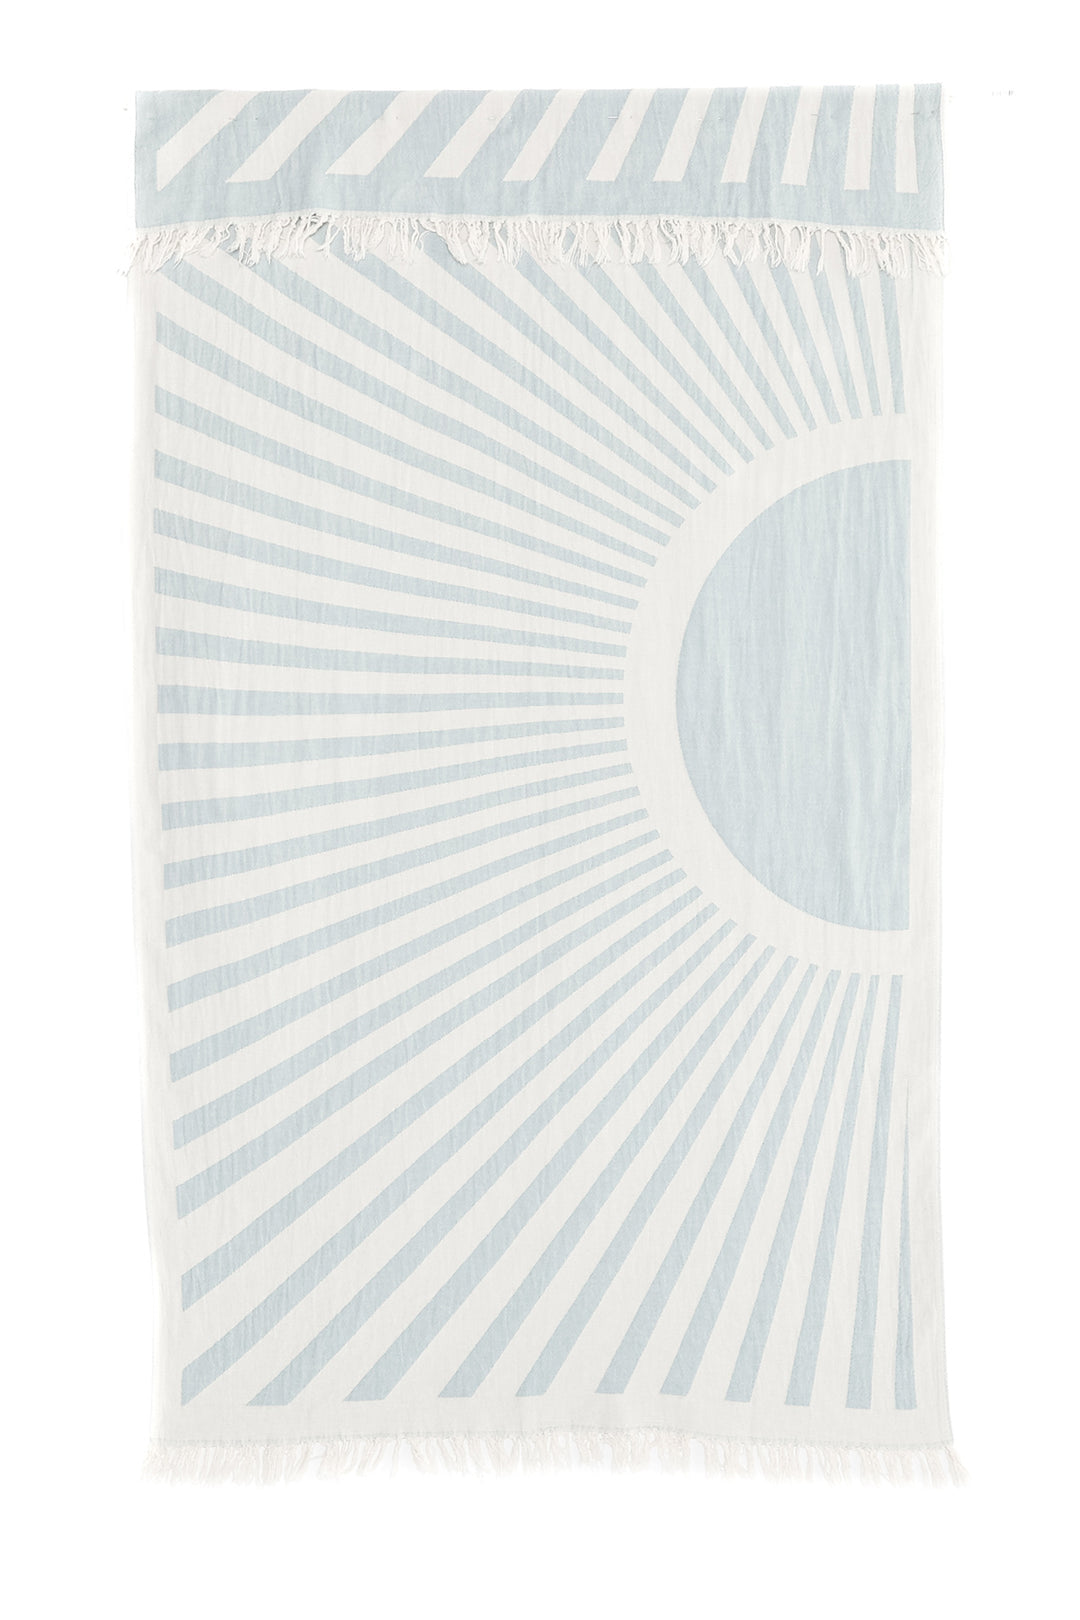 The Sun Flare Towel - Teal